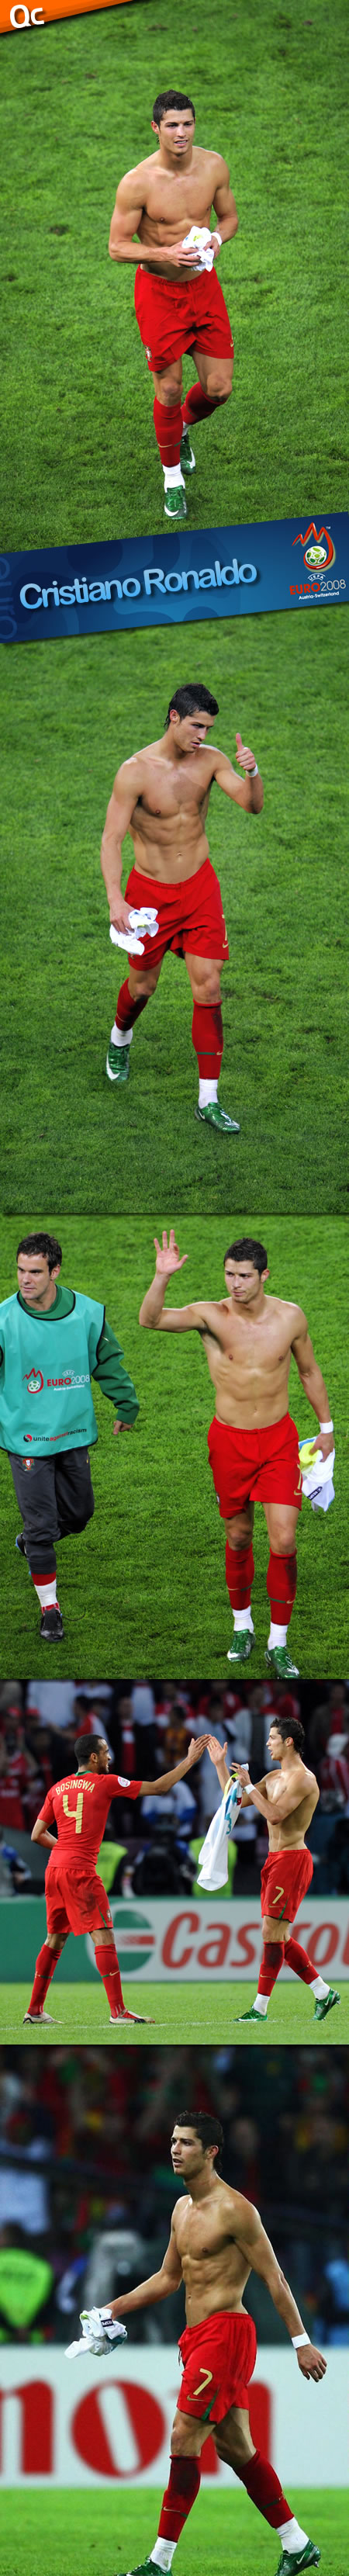 Euro 2008 - Cristiano Ronaldo